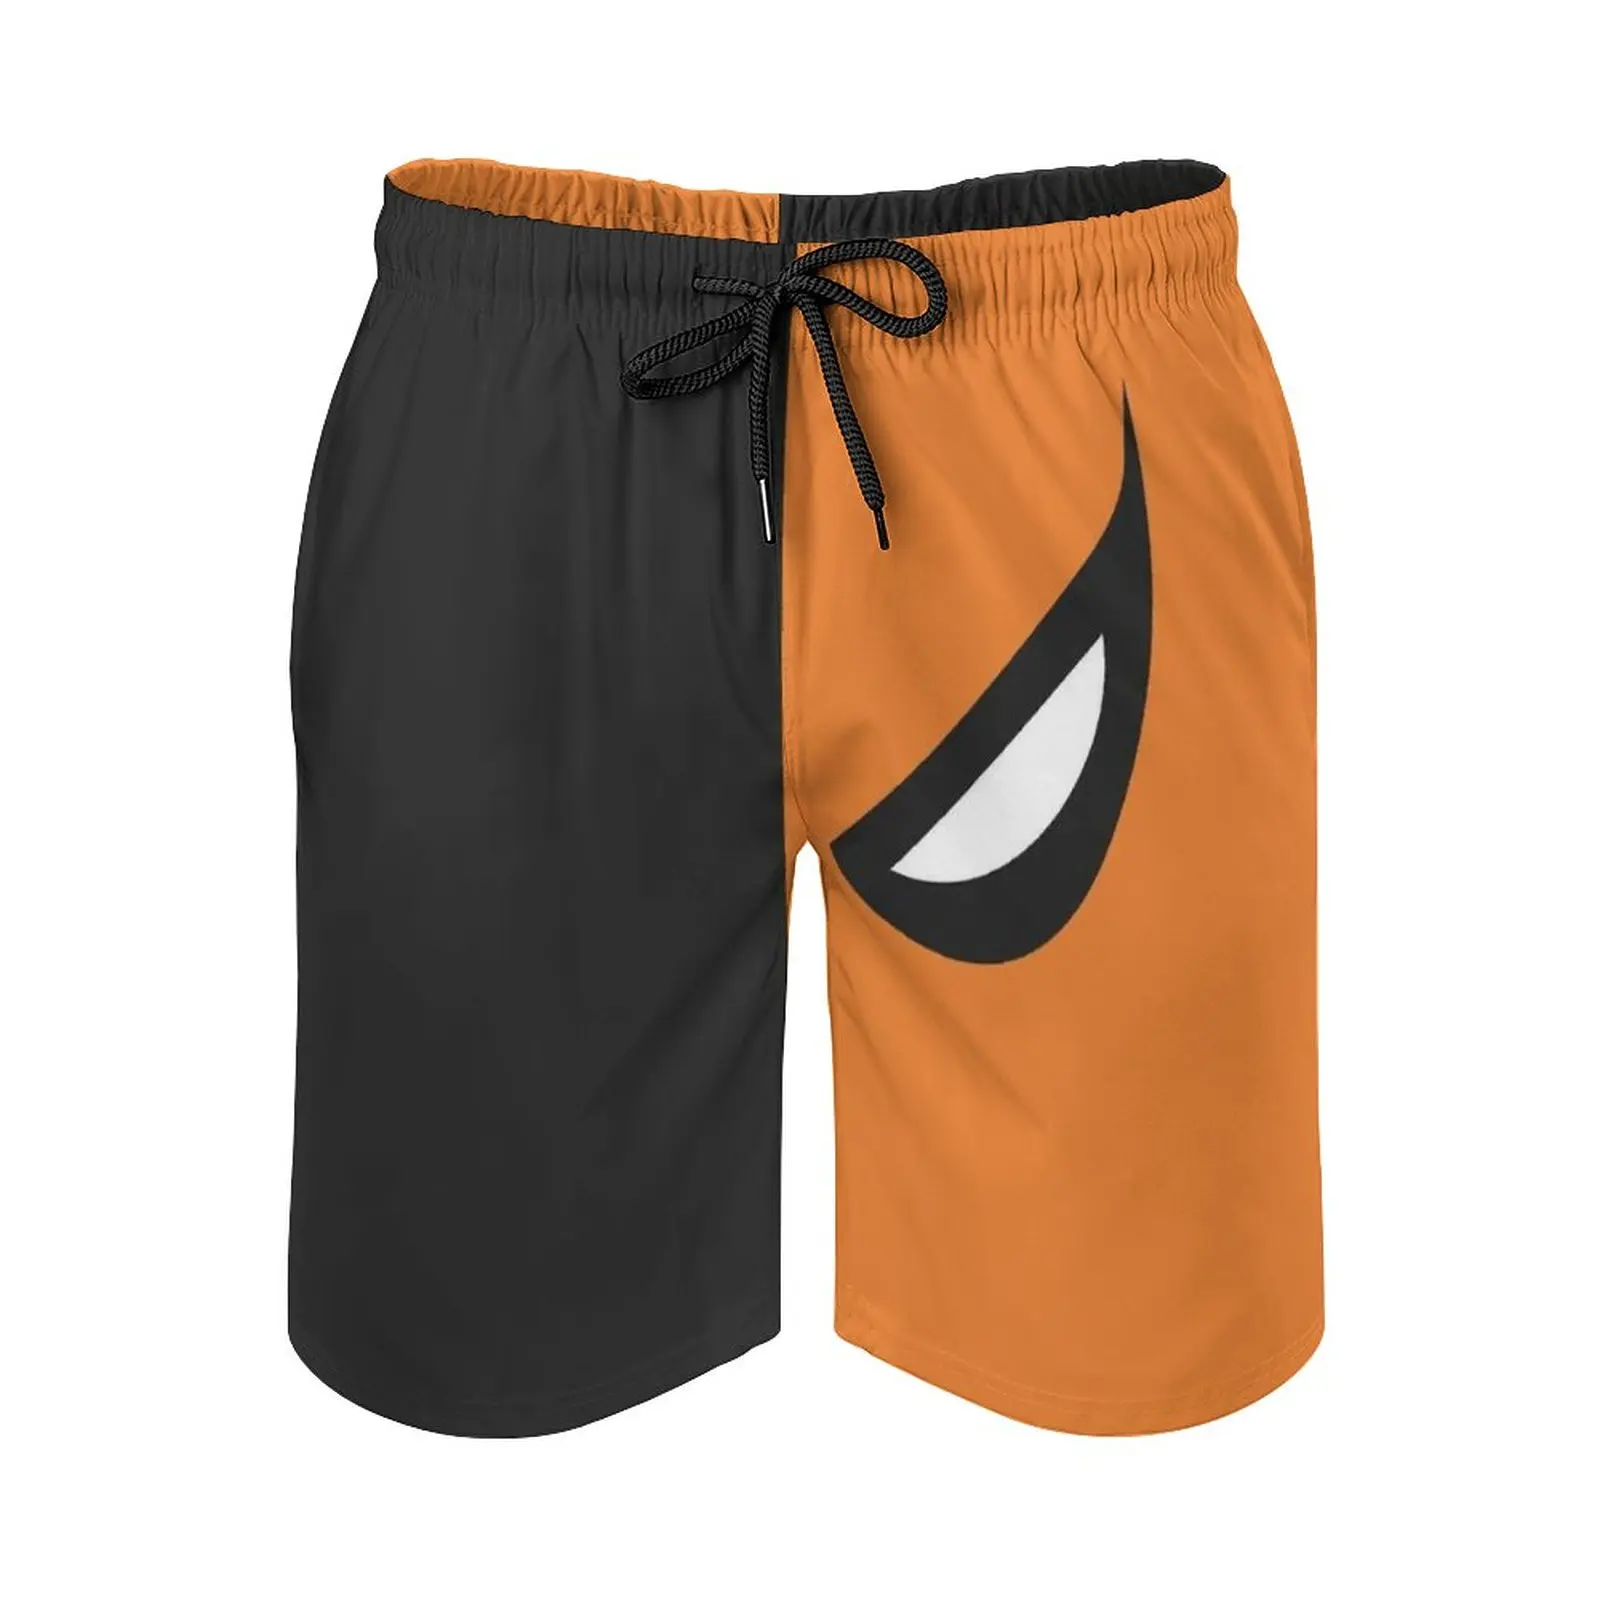 Deathstroke Mask Men'S Sport Running Beach Shorts Trunk Pants With Mesh Lining Trunks Shorts Deathstroke Slade Comics